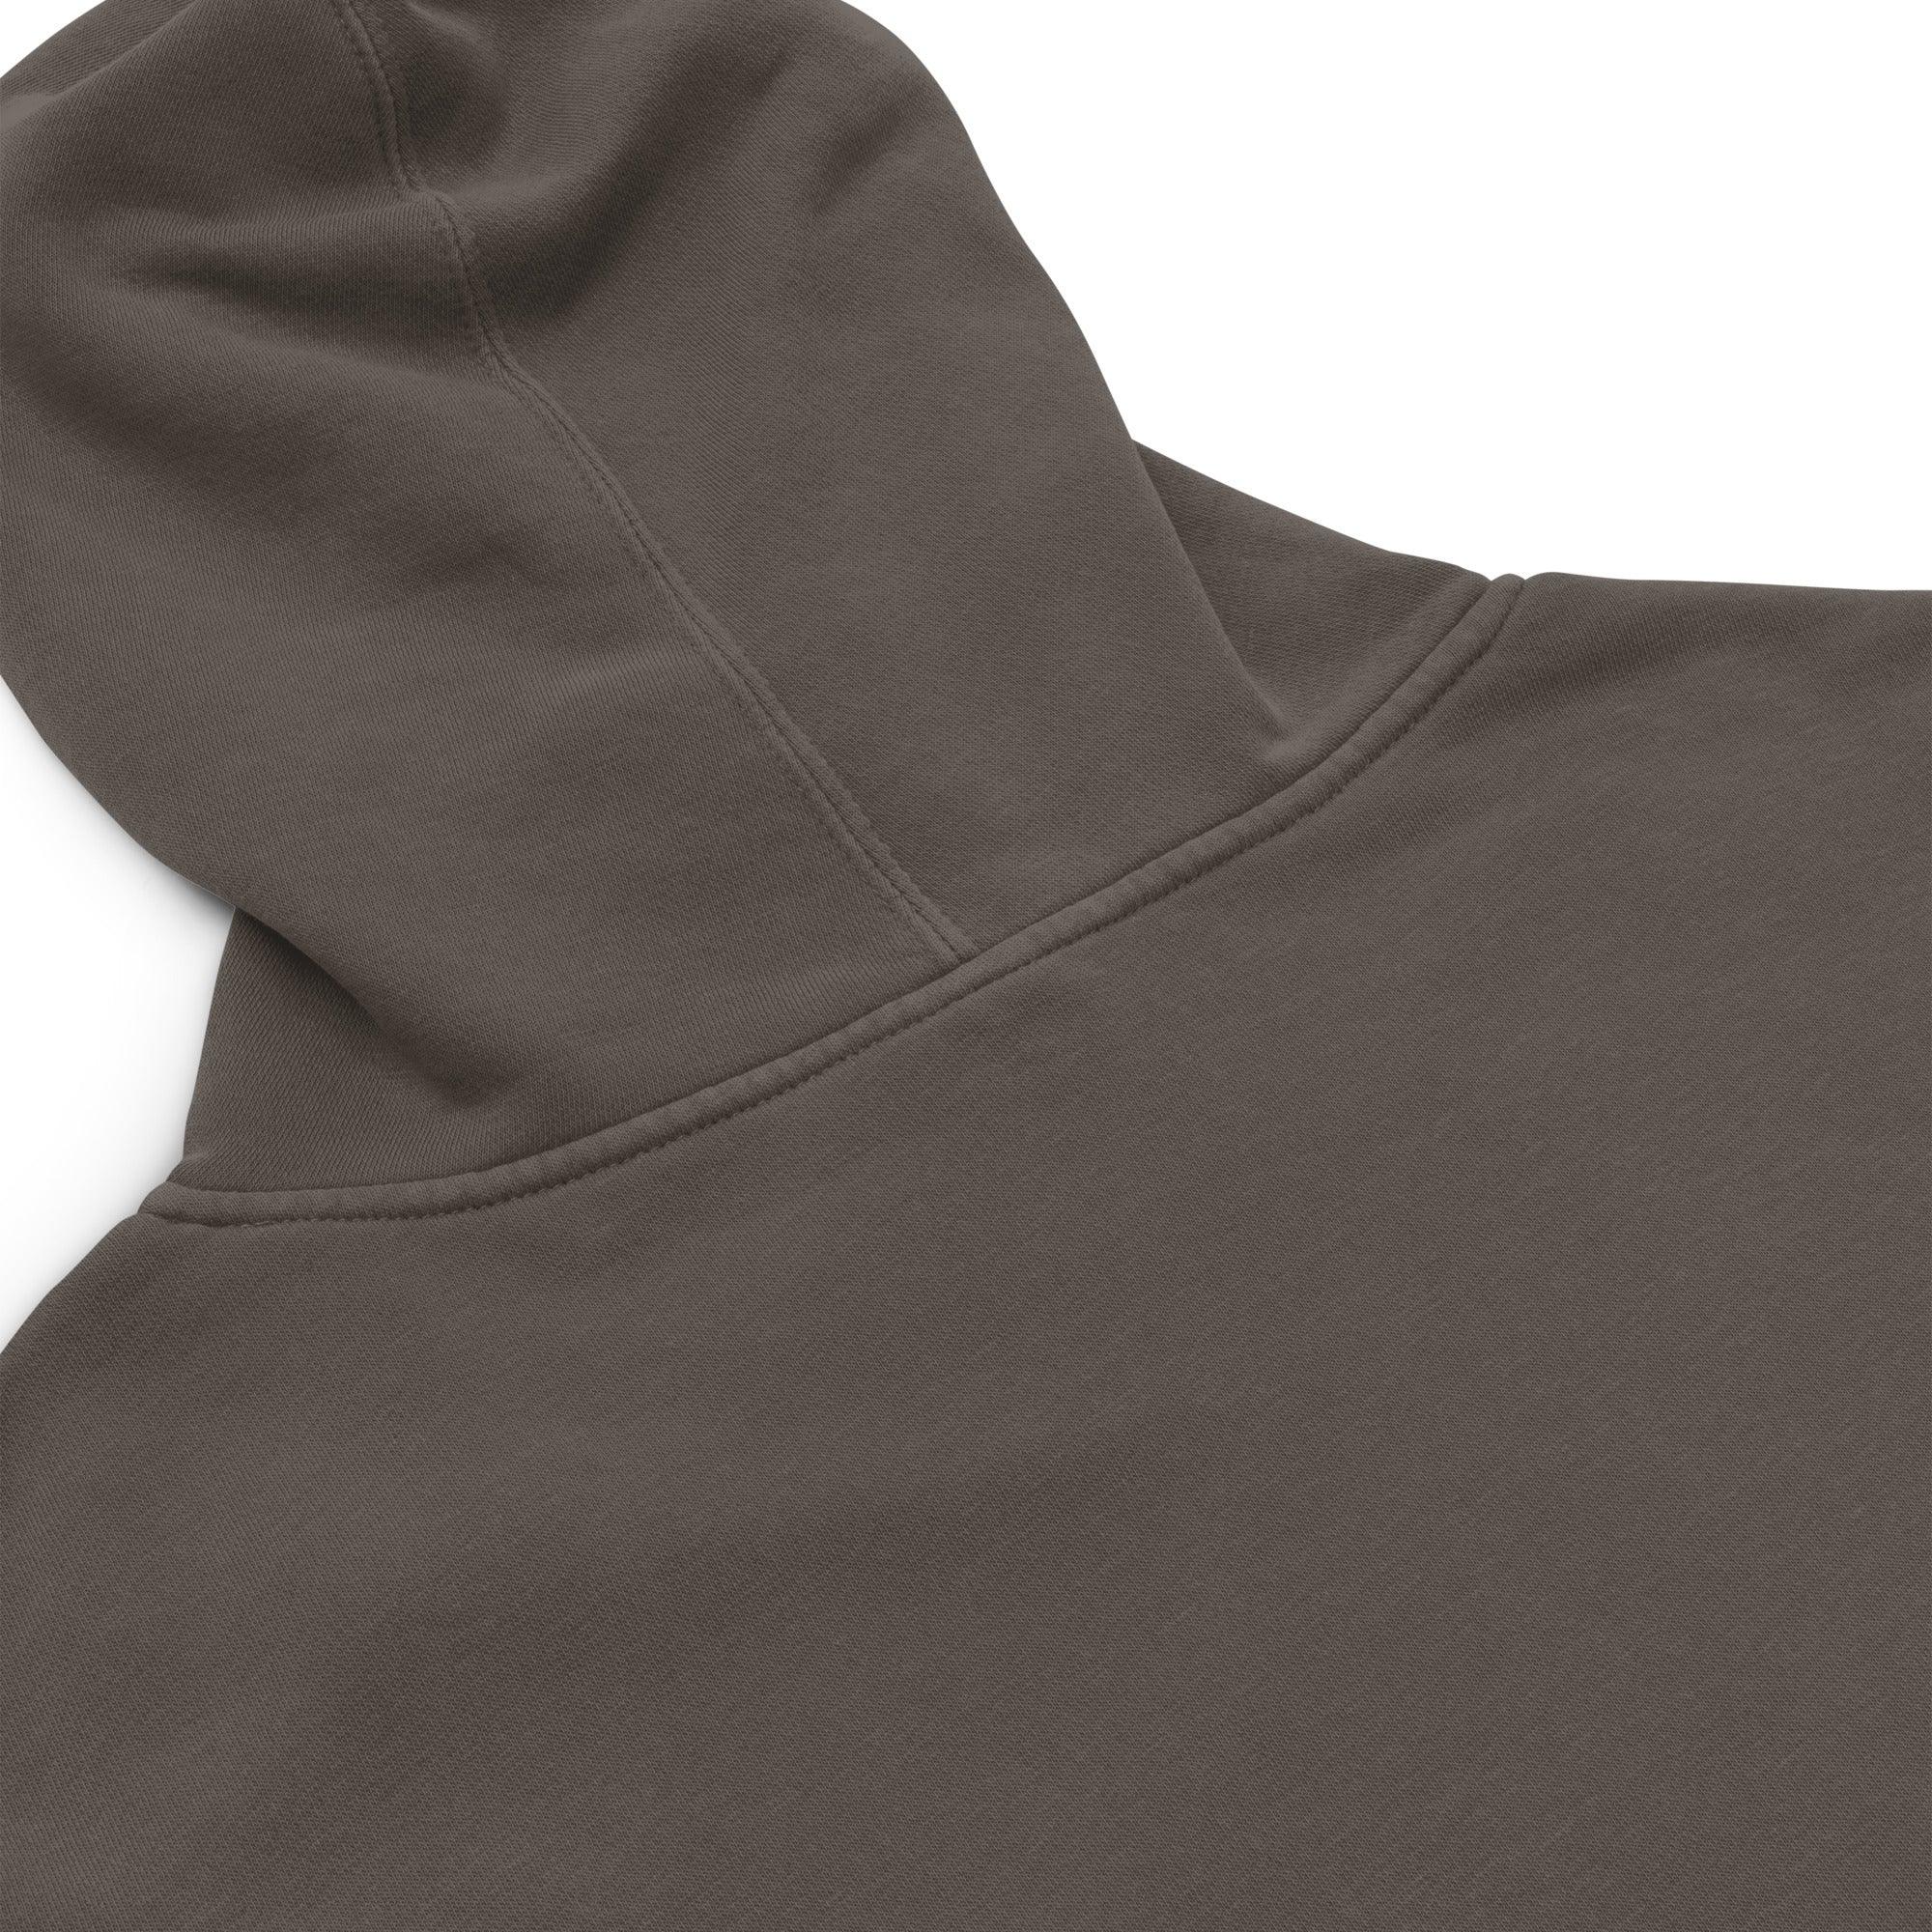 Unisex pigment-dyed hoodie-Elementologie - Elementologie